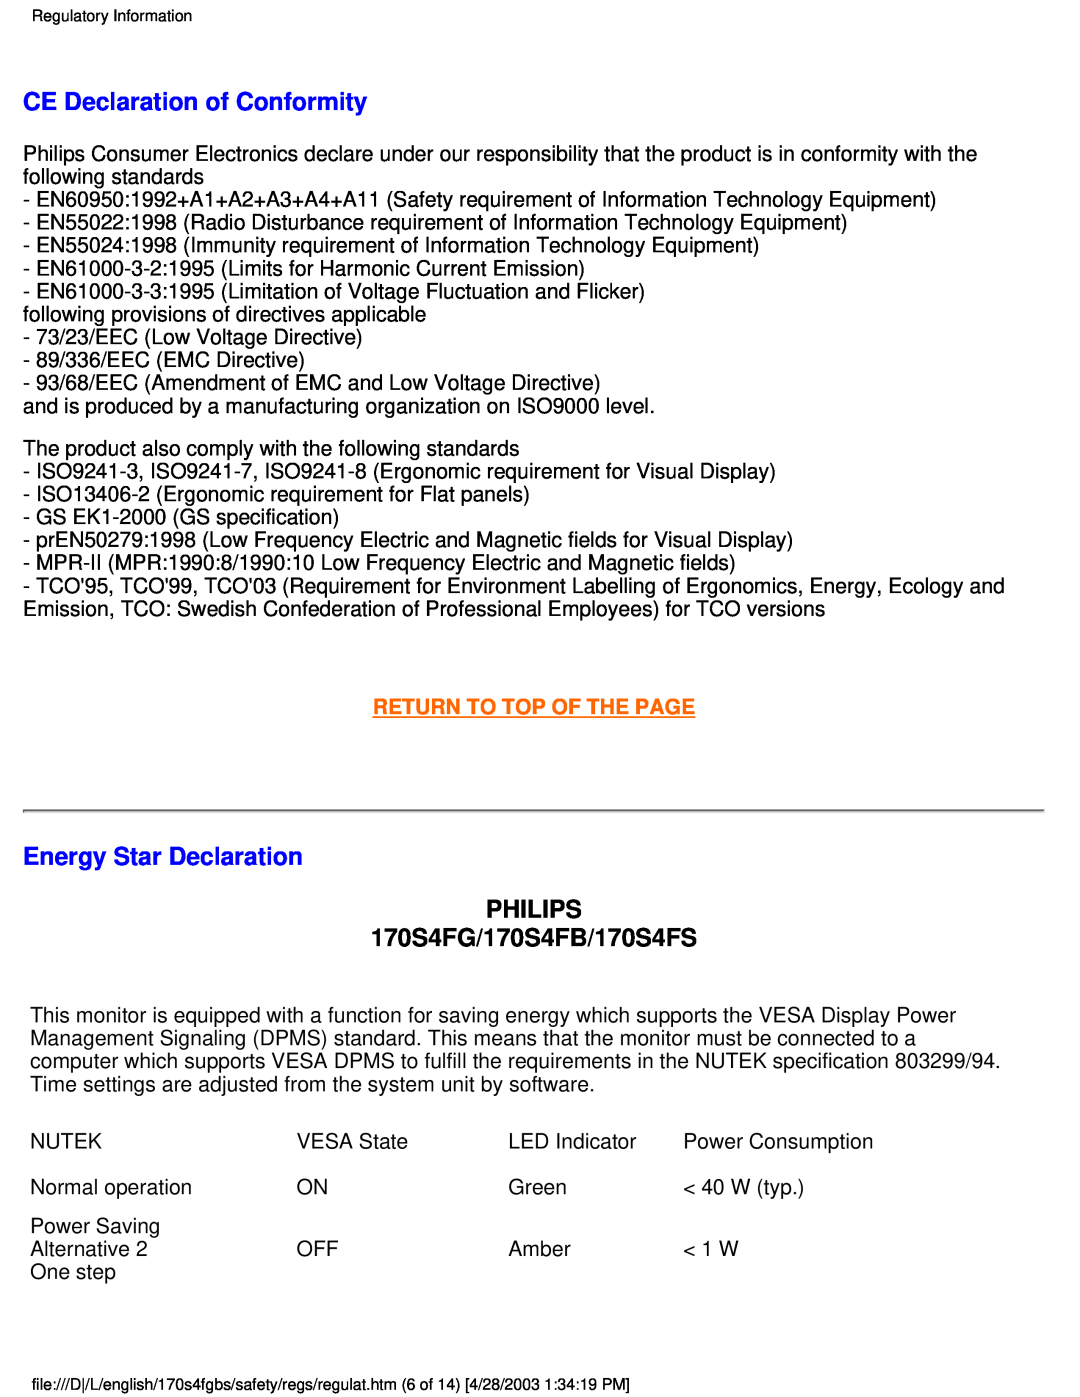 Philips user manual PHILIPS 170S4FG/170S4FB/170S4FS, CE Declaration of Conformity, Energy Star Declaration 